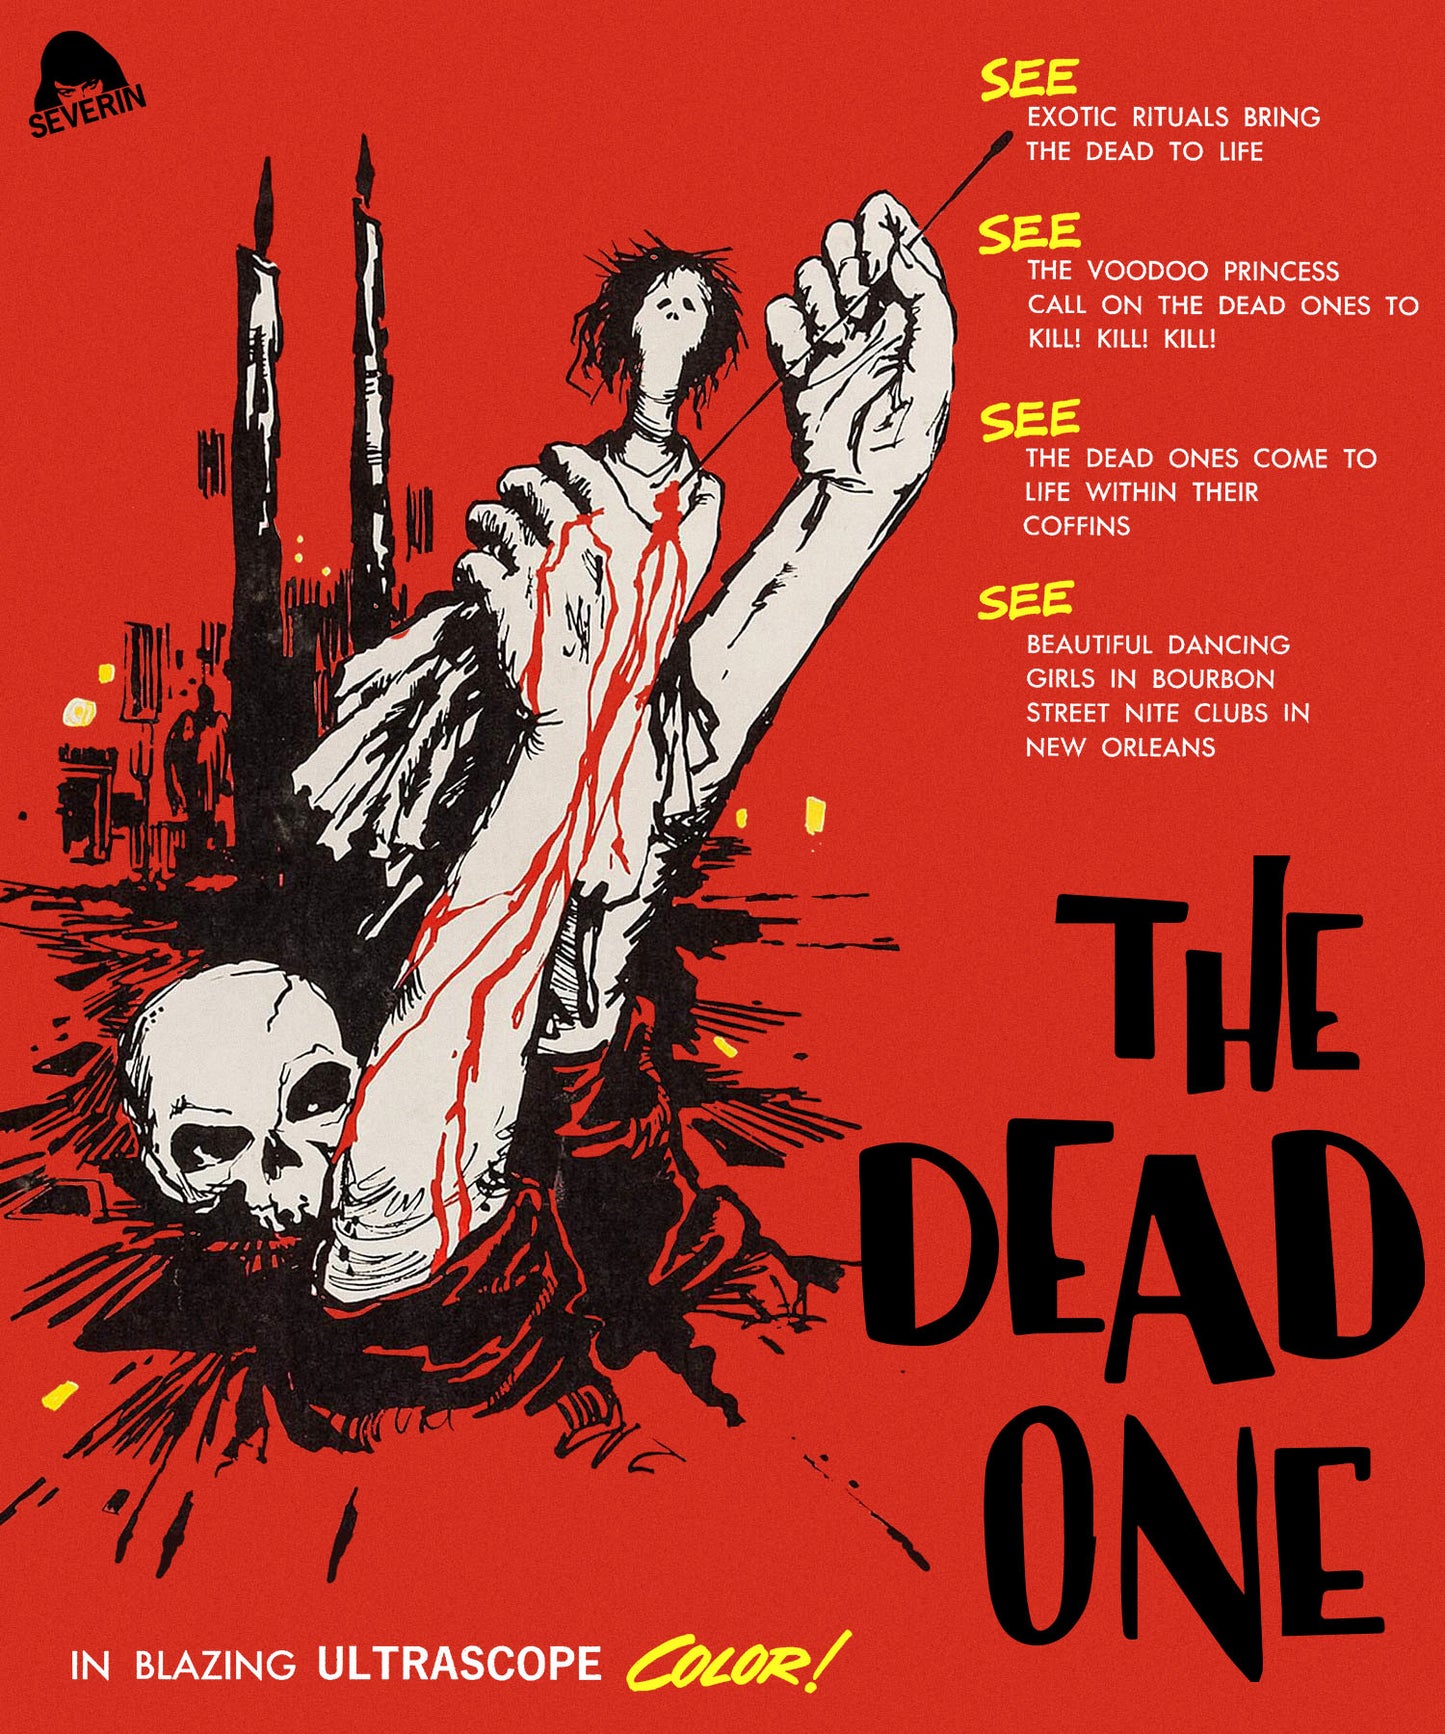 The Dead One Severin Films Blu-Ray [PRE-ORDER]